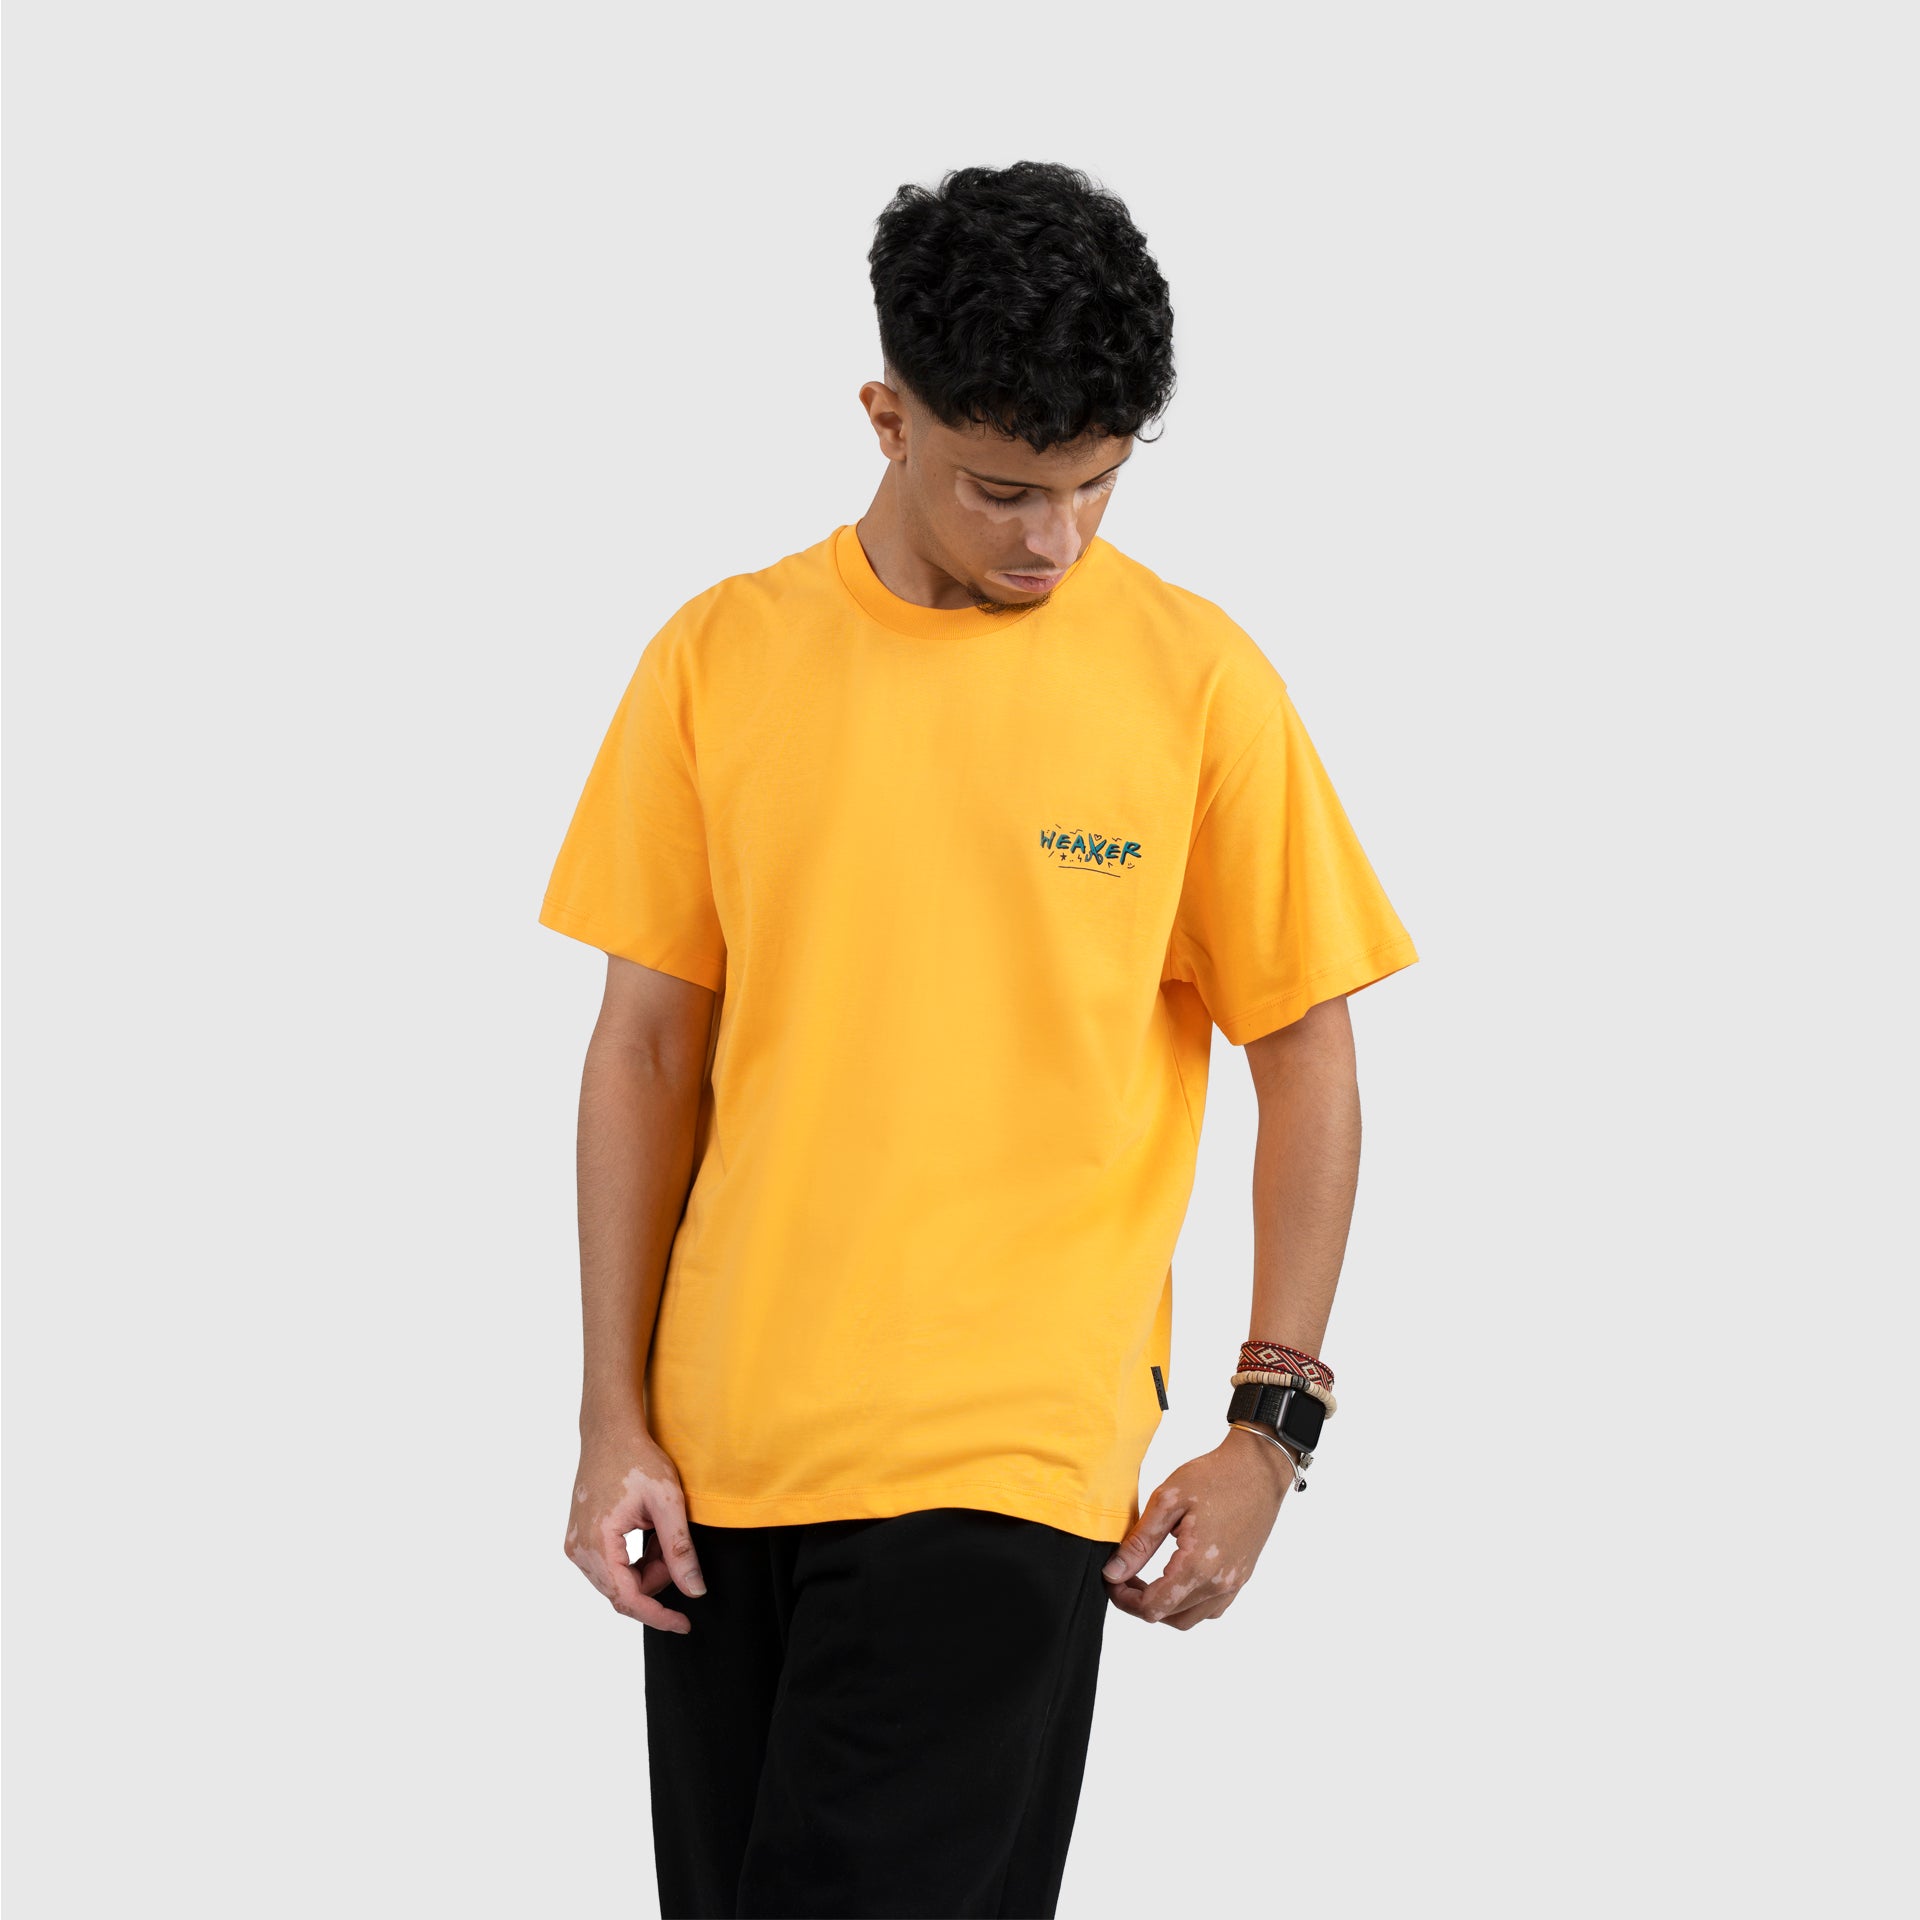 Orange Classic T-shirt From Weaver Design